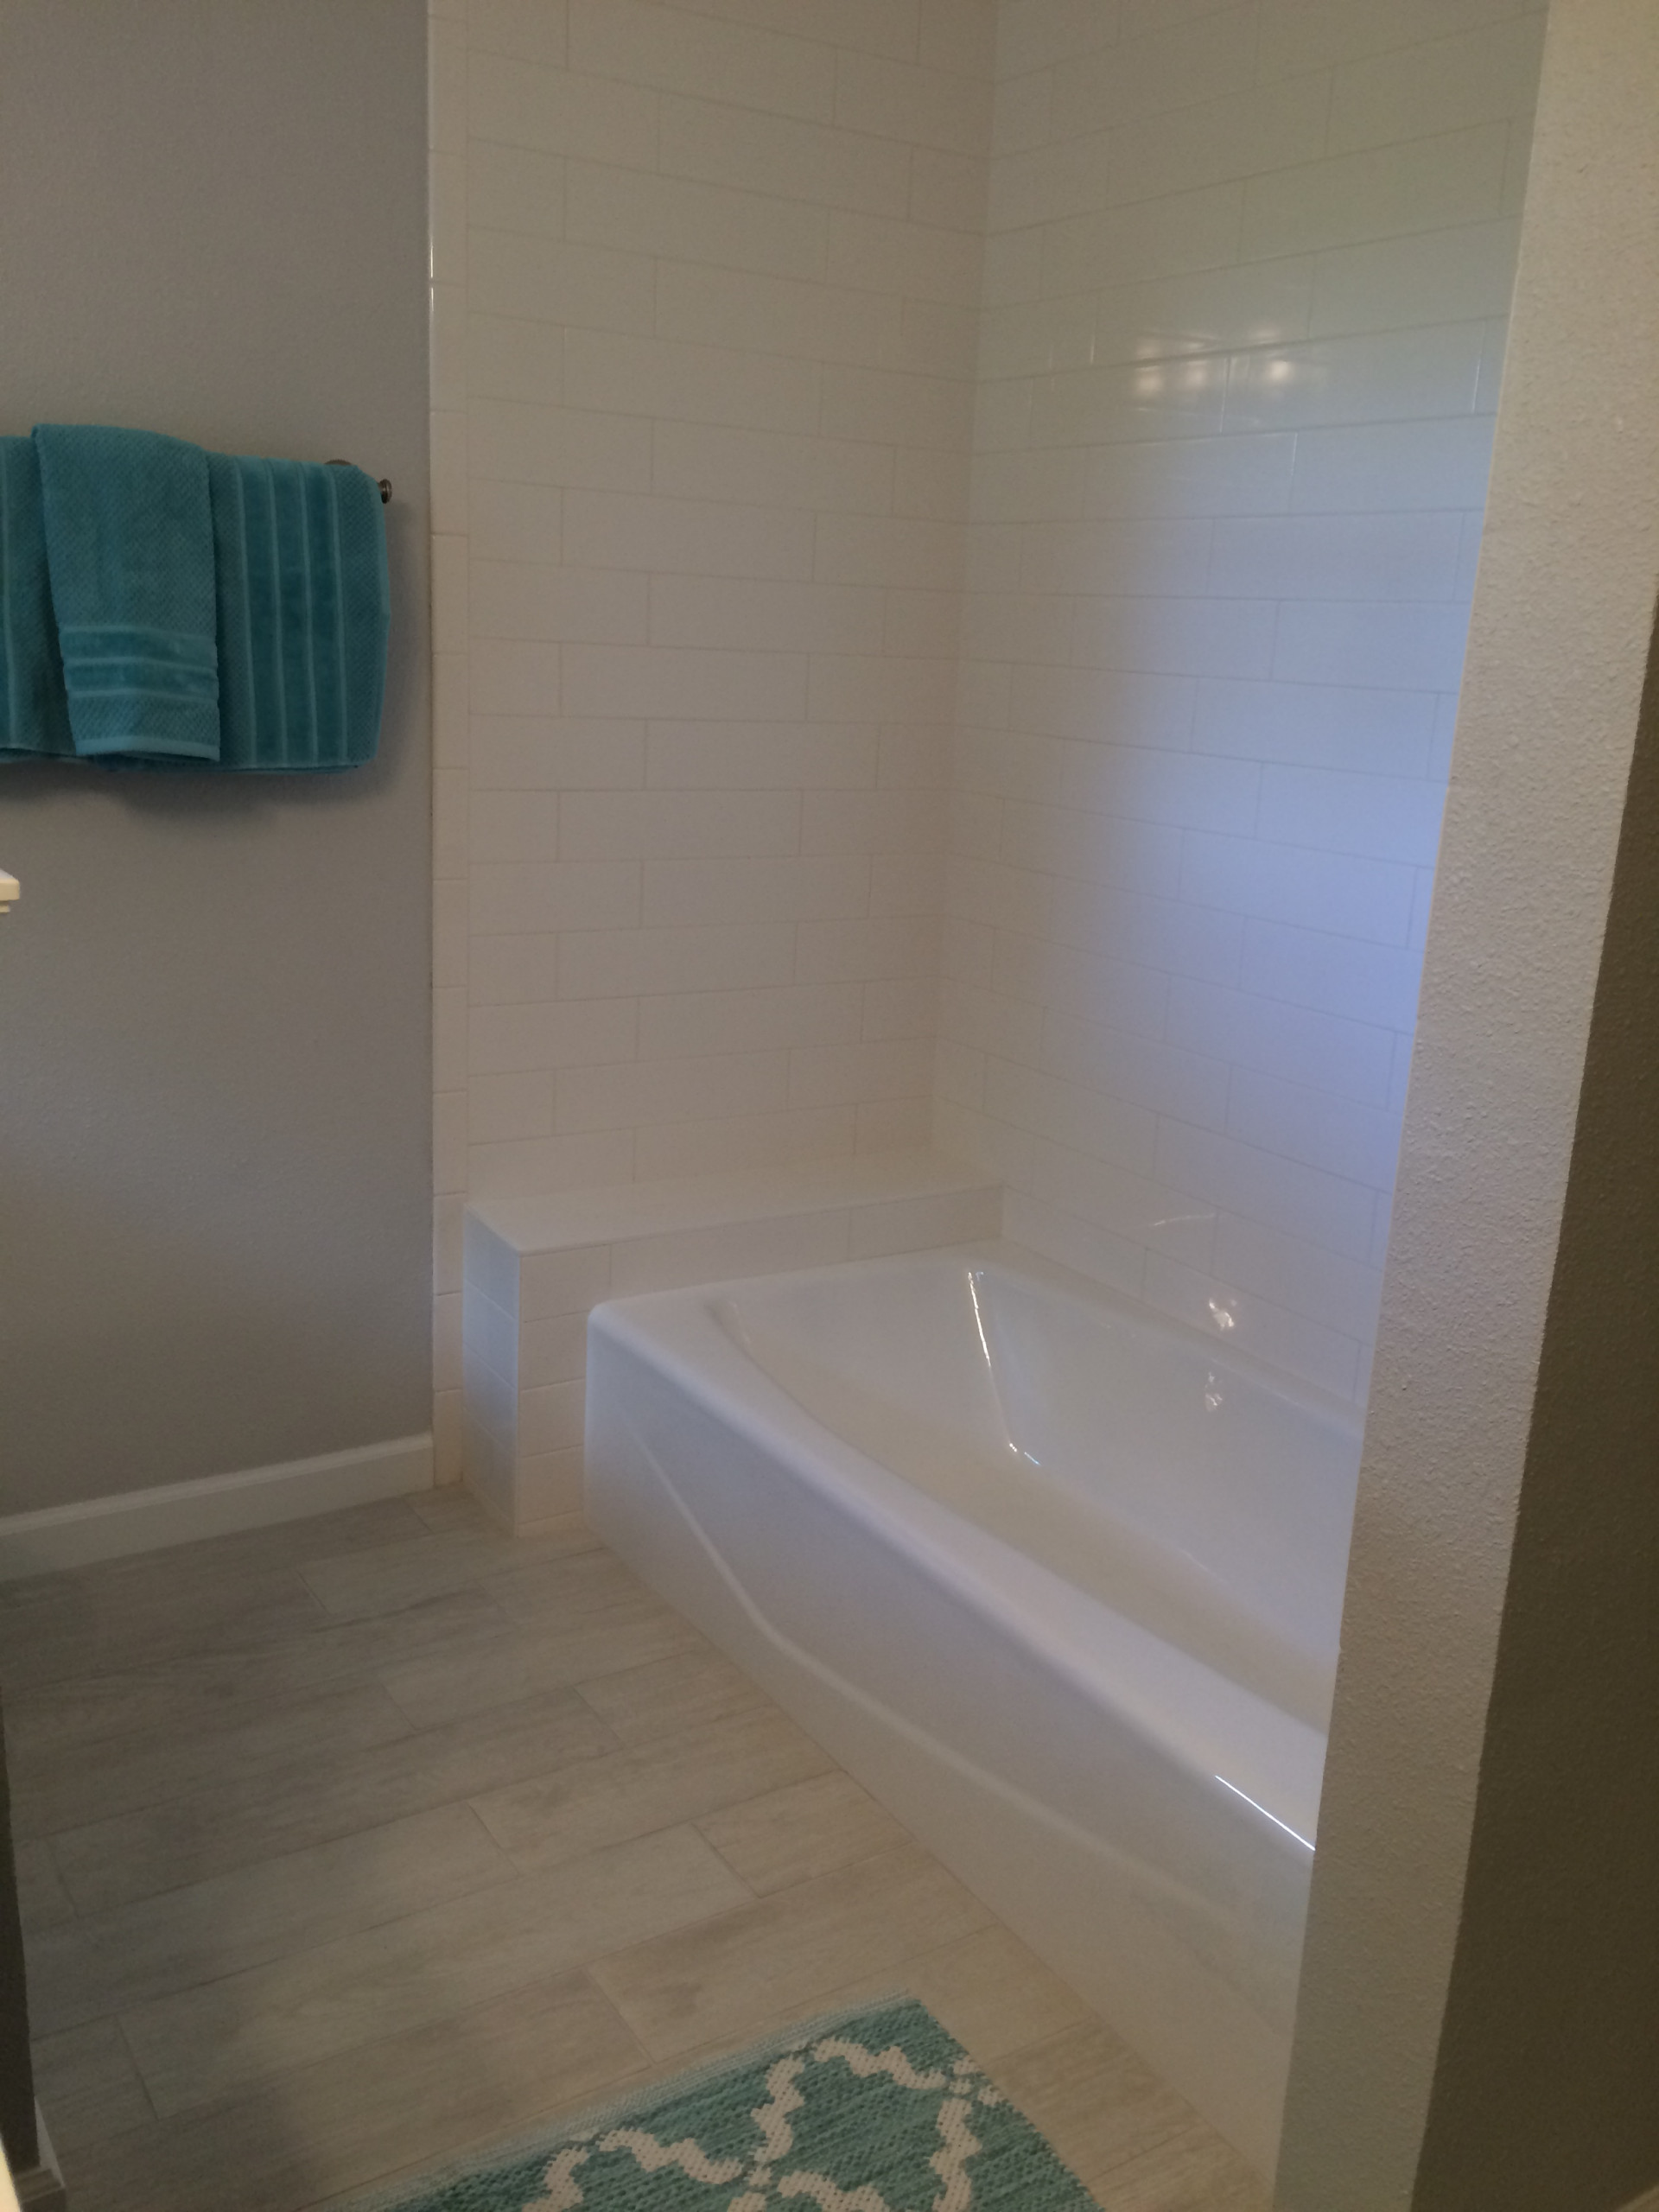 New Shower Tile to Ceiling & Same Tub!